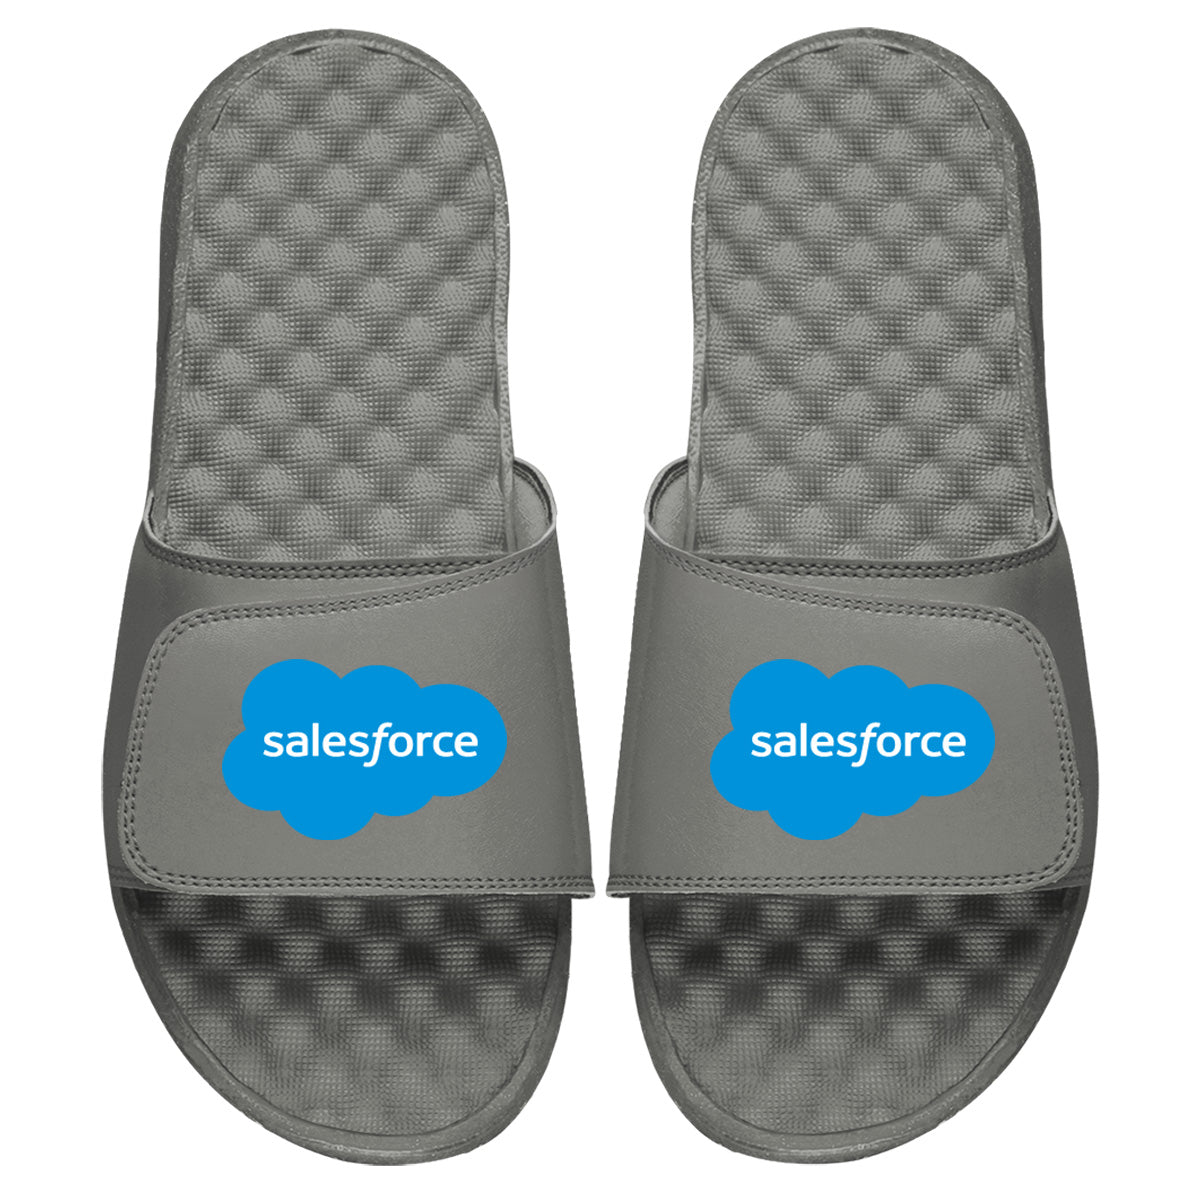 Salesforce Slides